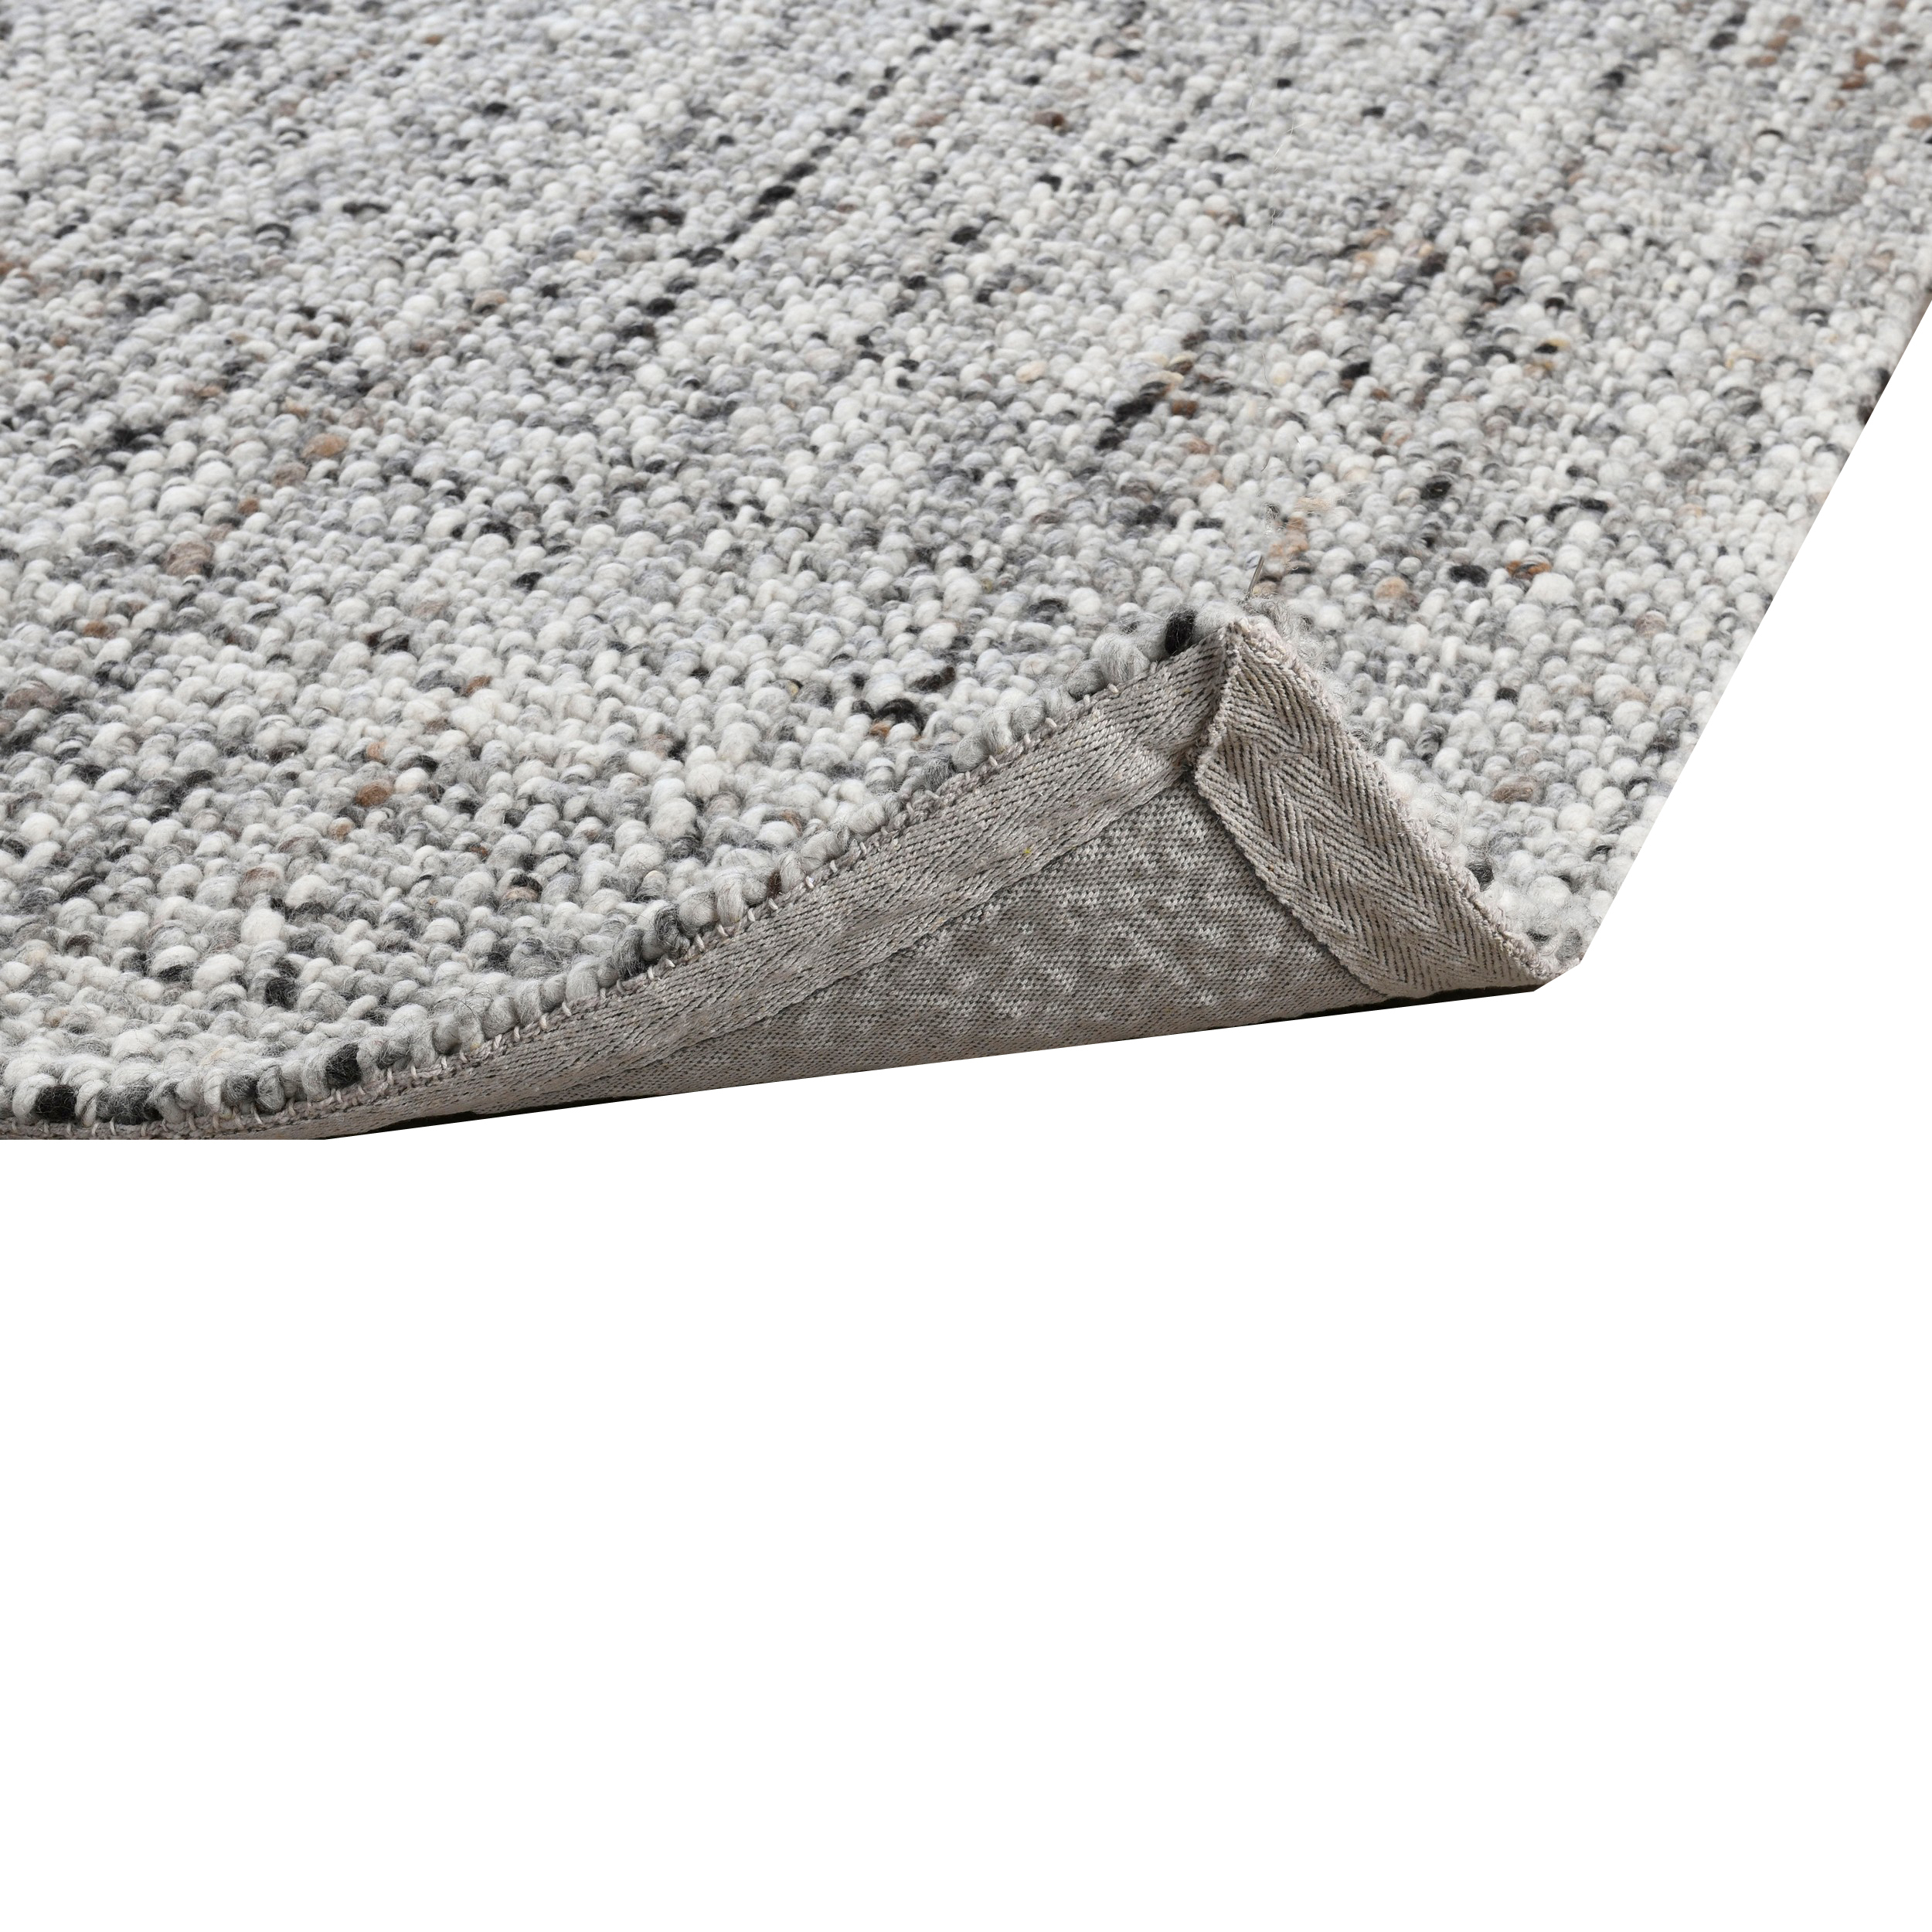 Kio 5 X 8 Medium Heather Area Rug, Handwoven New Zealand Wool, Gray, Ivory- Saltoro Sherpi